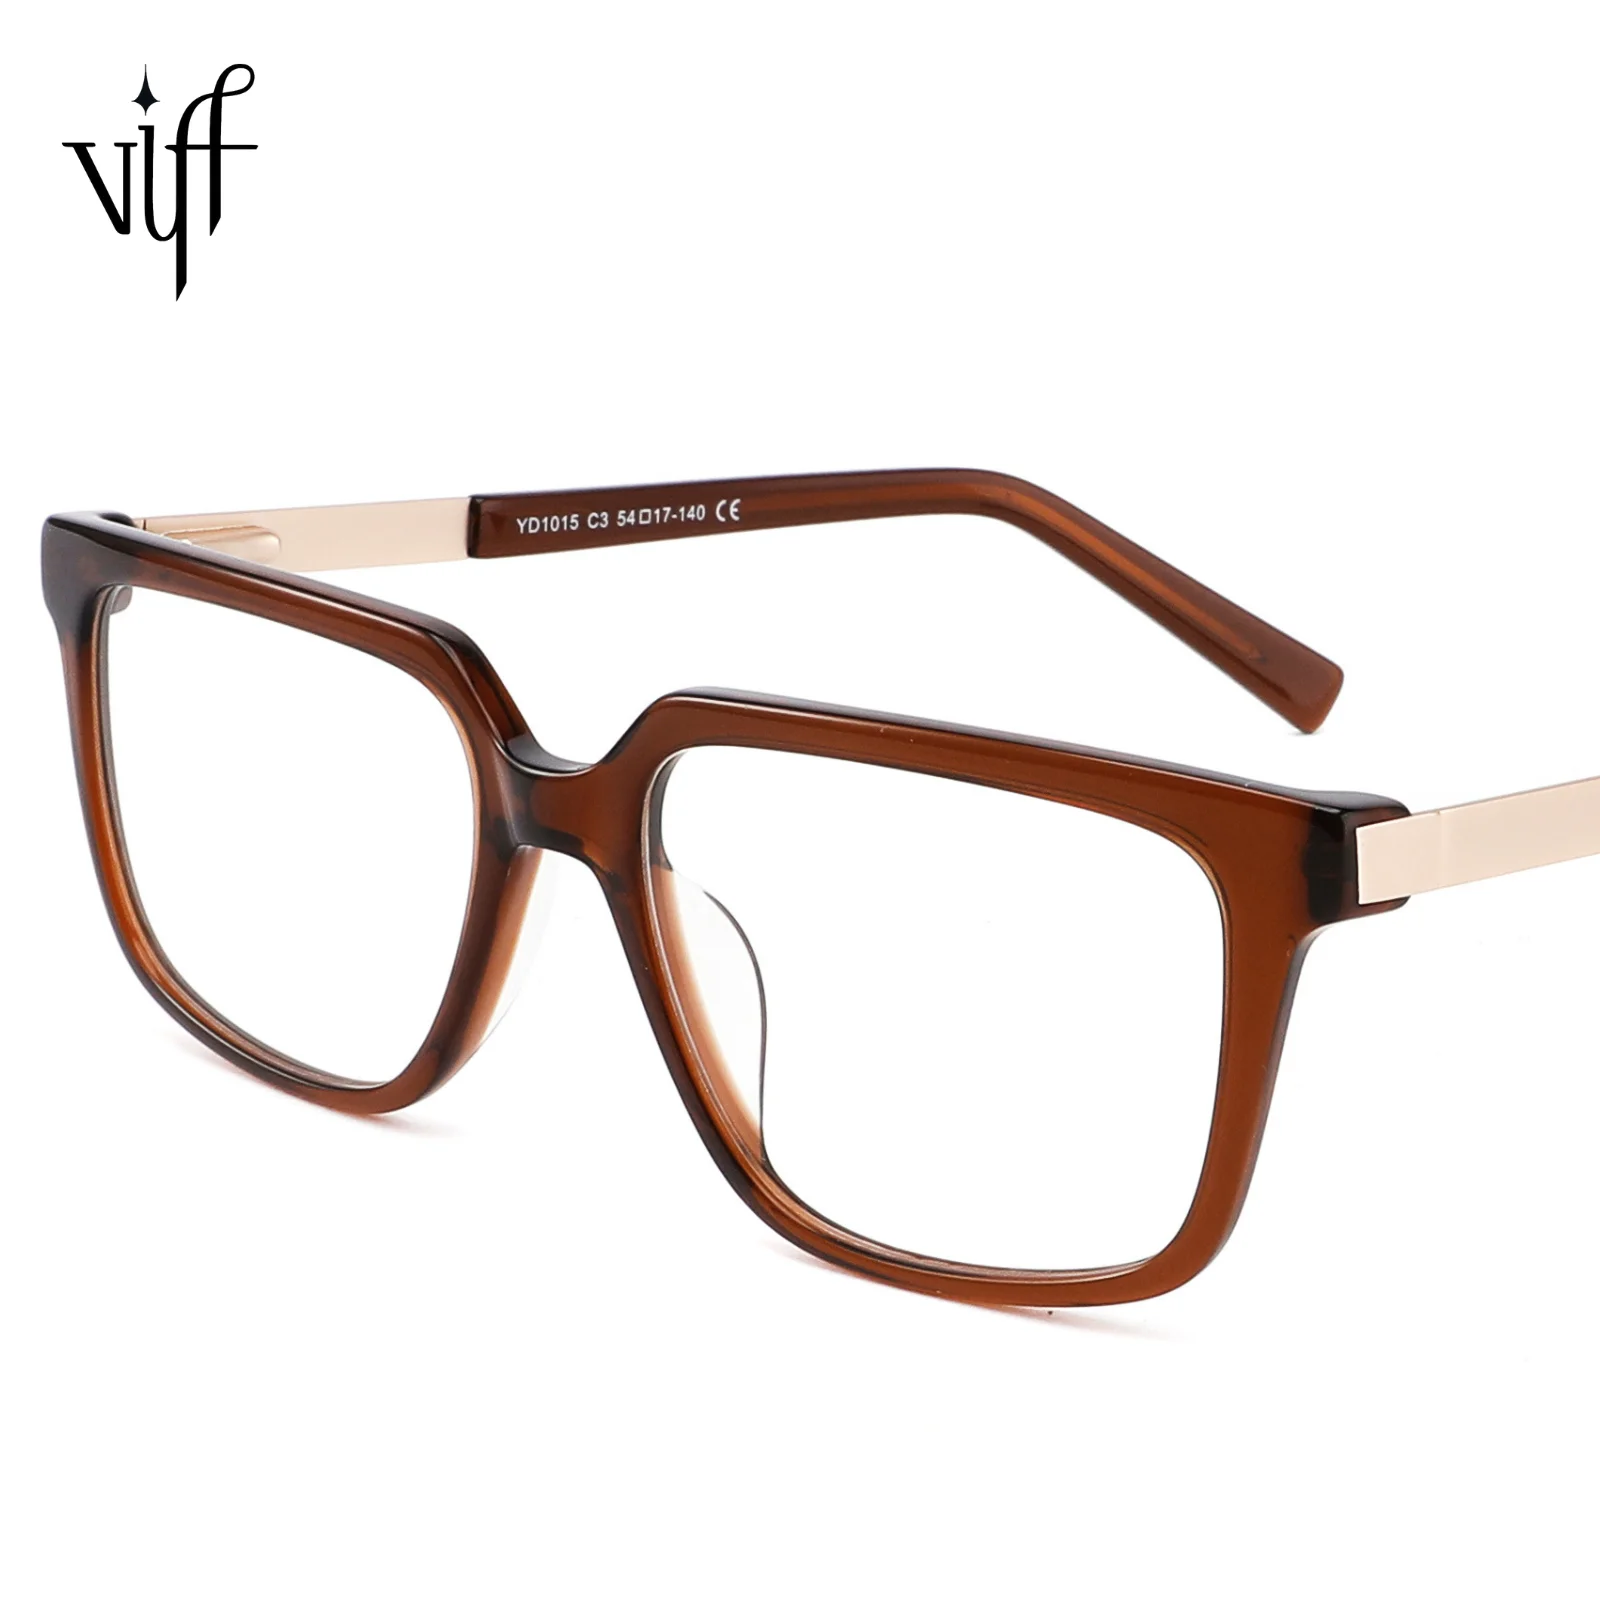 

VIFF HA1015 Eyeglasses Fashion Optical Frame Woman Glasses High Quality Acetate Fashion Sunglasses Frame Acetate Sunglasses Men